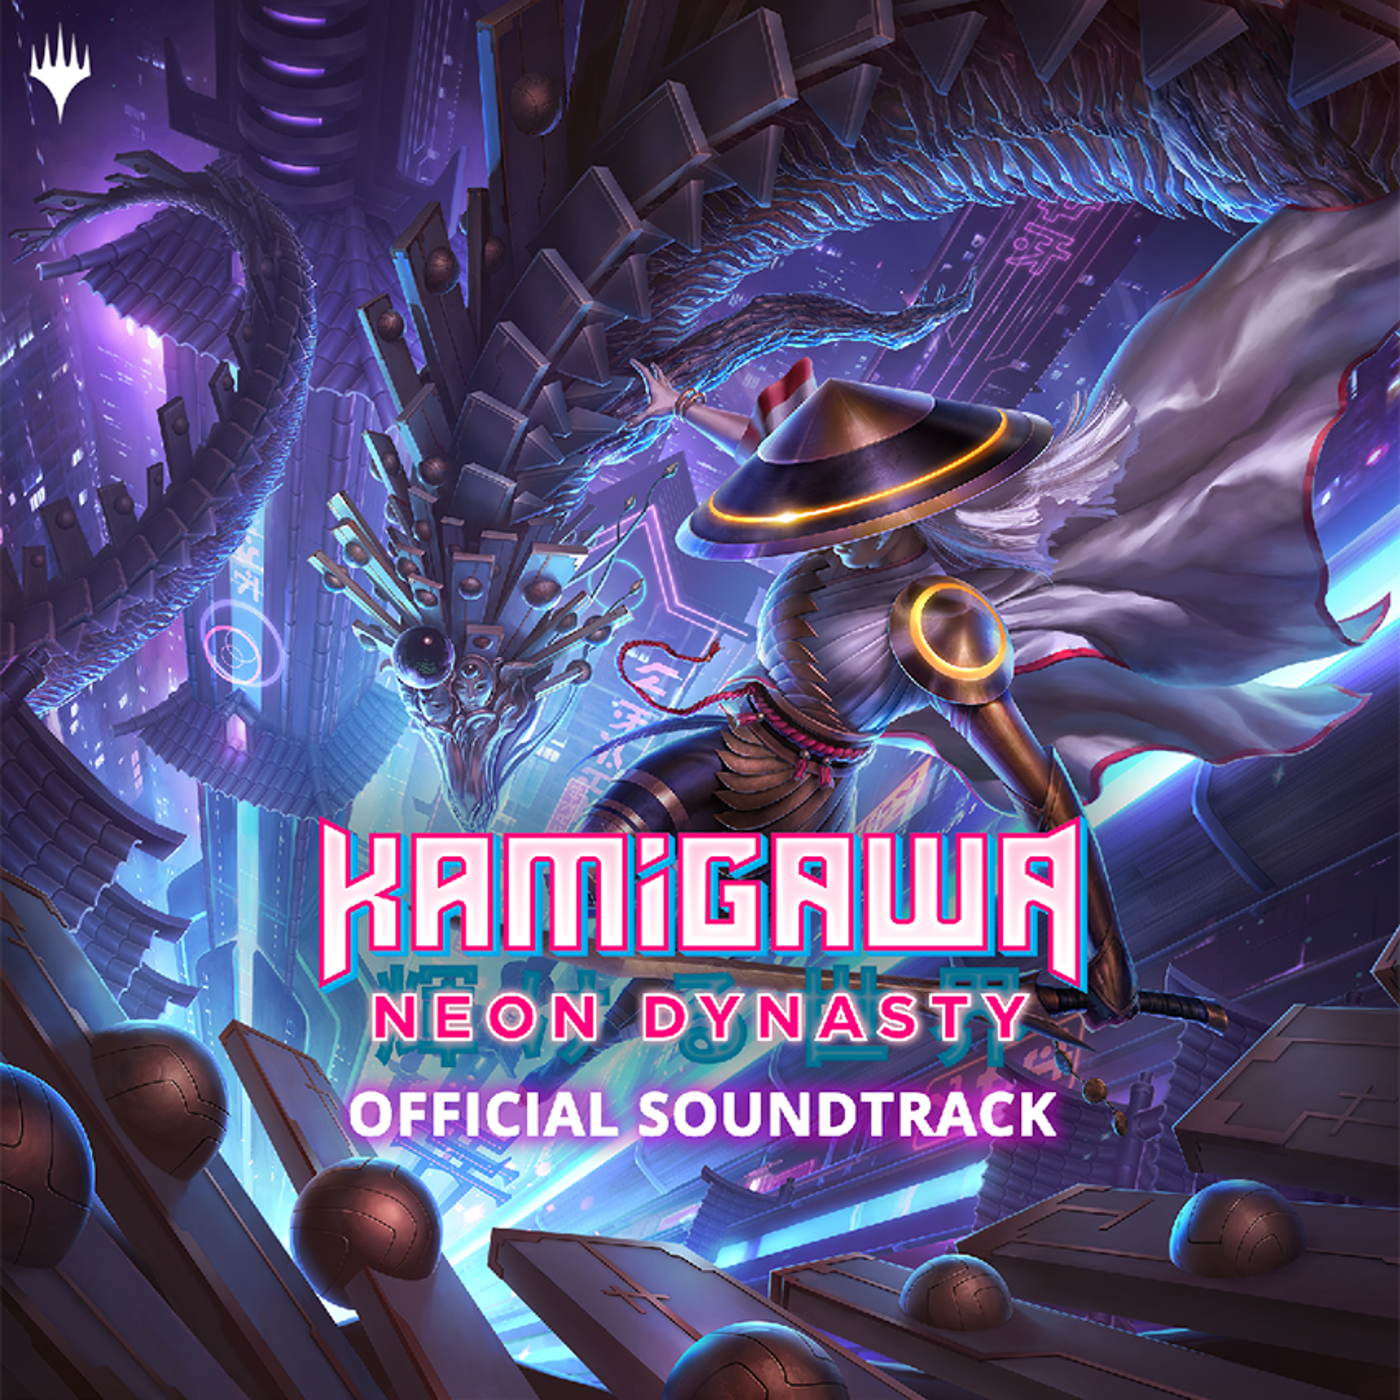 Album artwork for the Magic: The Gathering Kamigawa: Neon Dynasty soundtrack